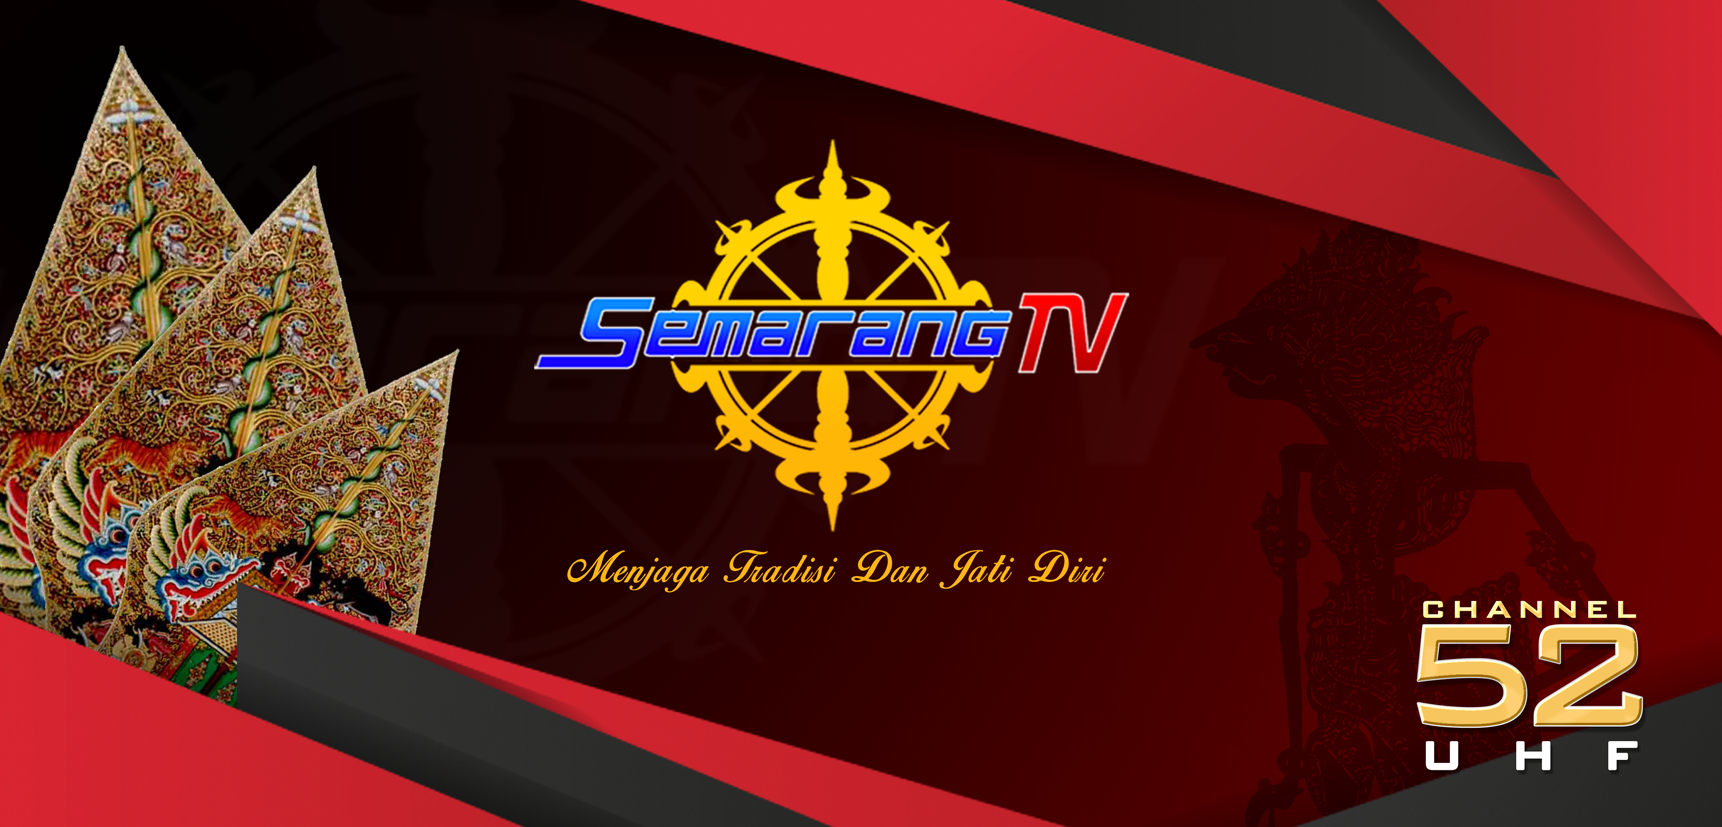 Semarang TV 52 UHF